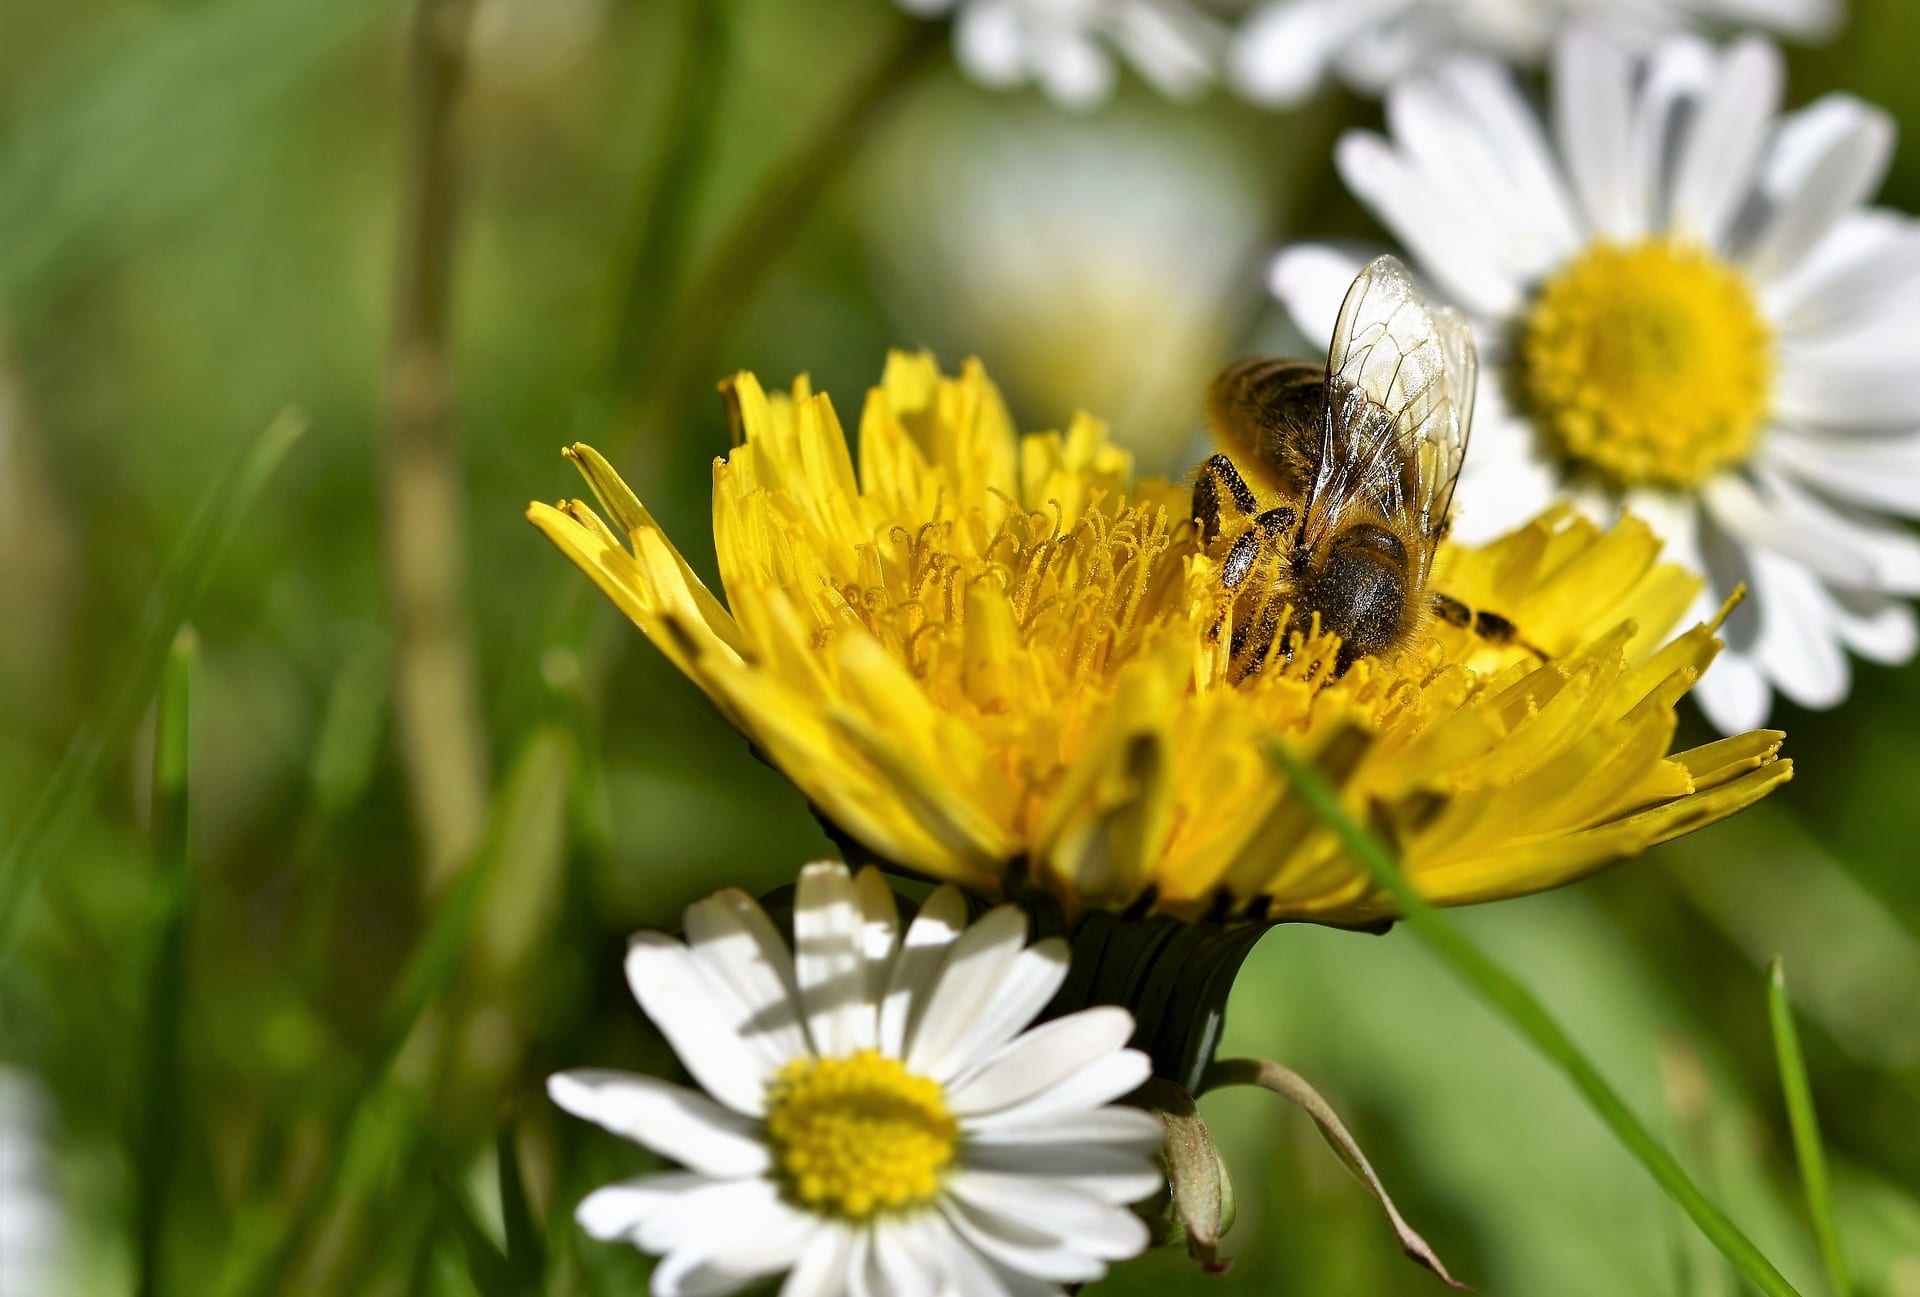 Bee on dandelion near lawn daisies